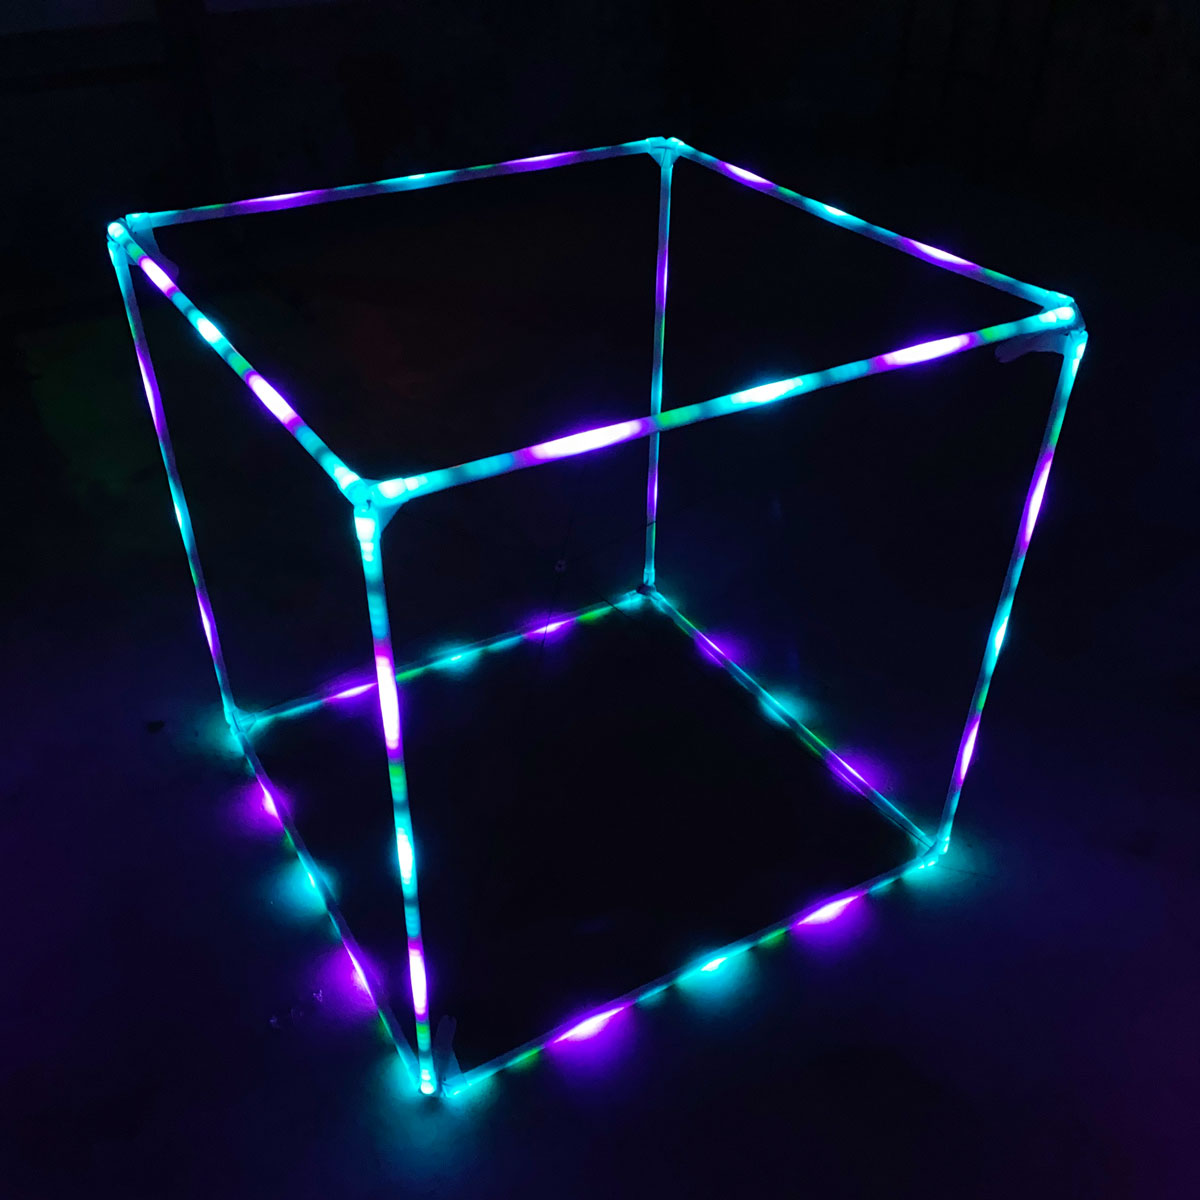 https://ignispixel.com/files/originals/ignis-pixel-led-cube_20221013_153611_322.jpg